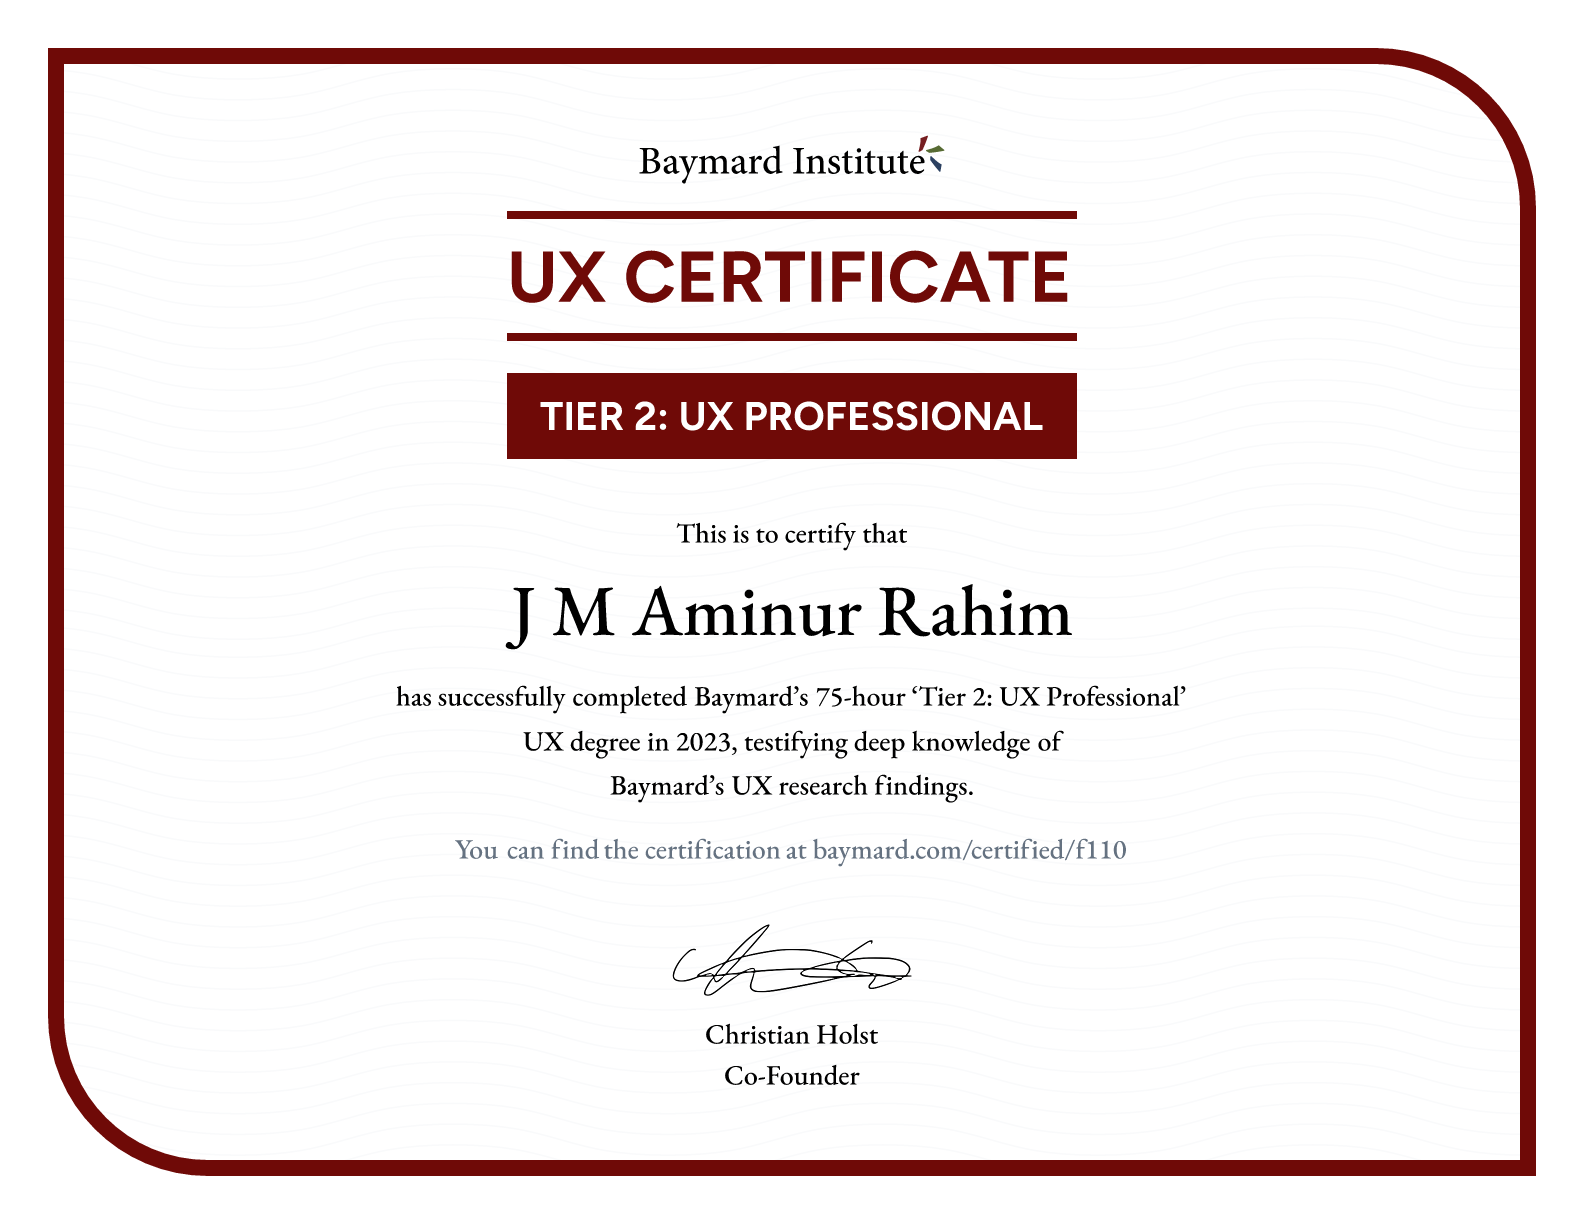 J M Aminur Rahim’s certificate